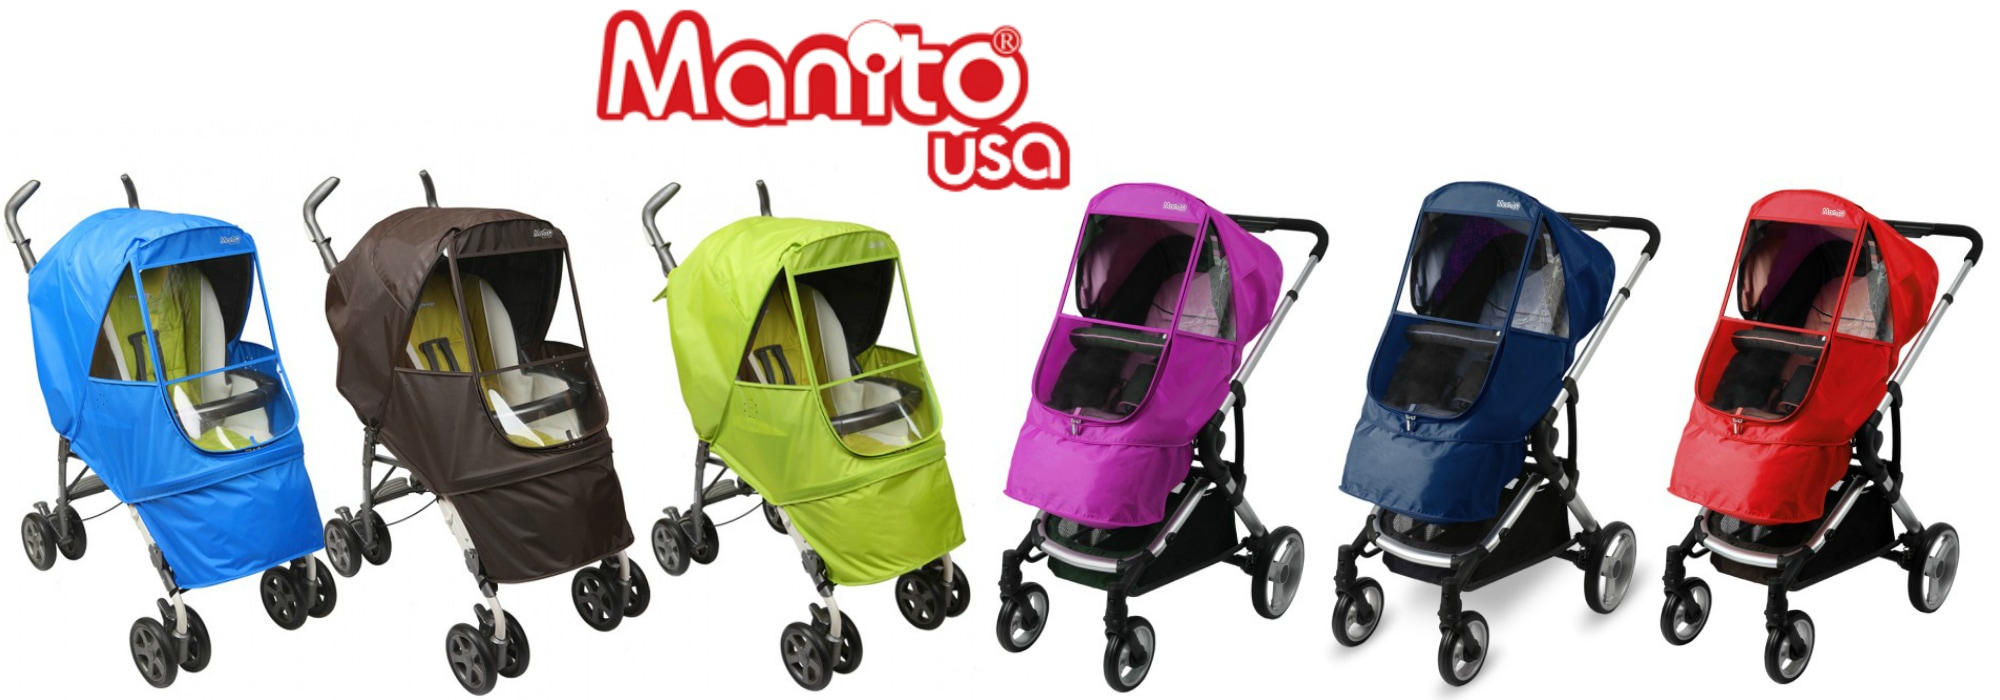 Win a Manito Elegance Stroller Shield in US Japan Fam's $500 value 